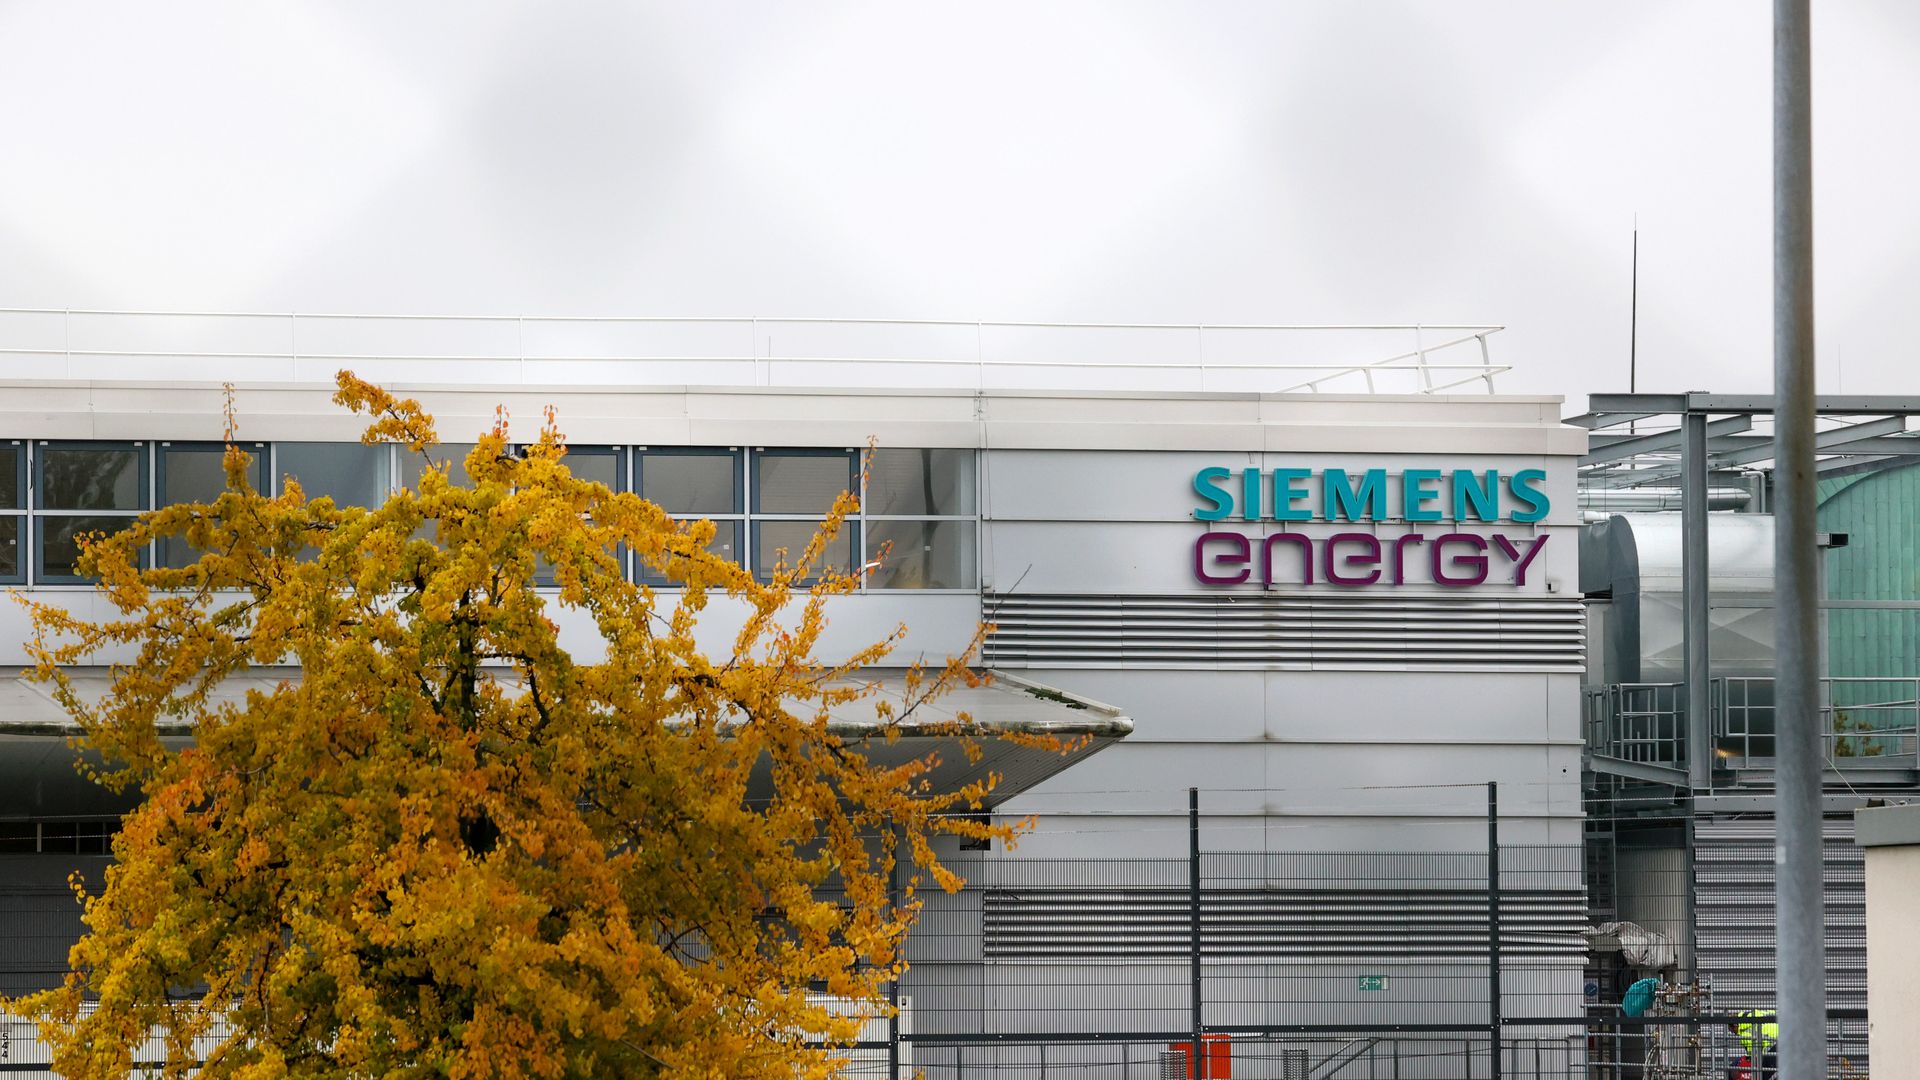 A Siemens Energy building in Germany